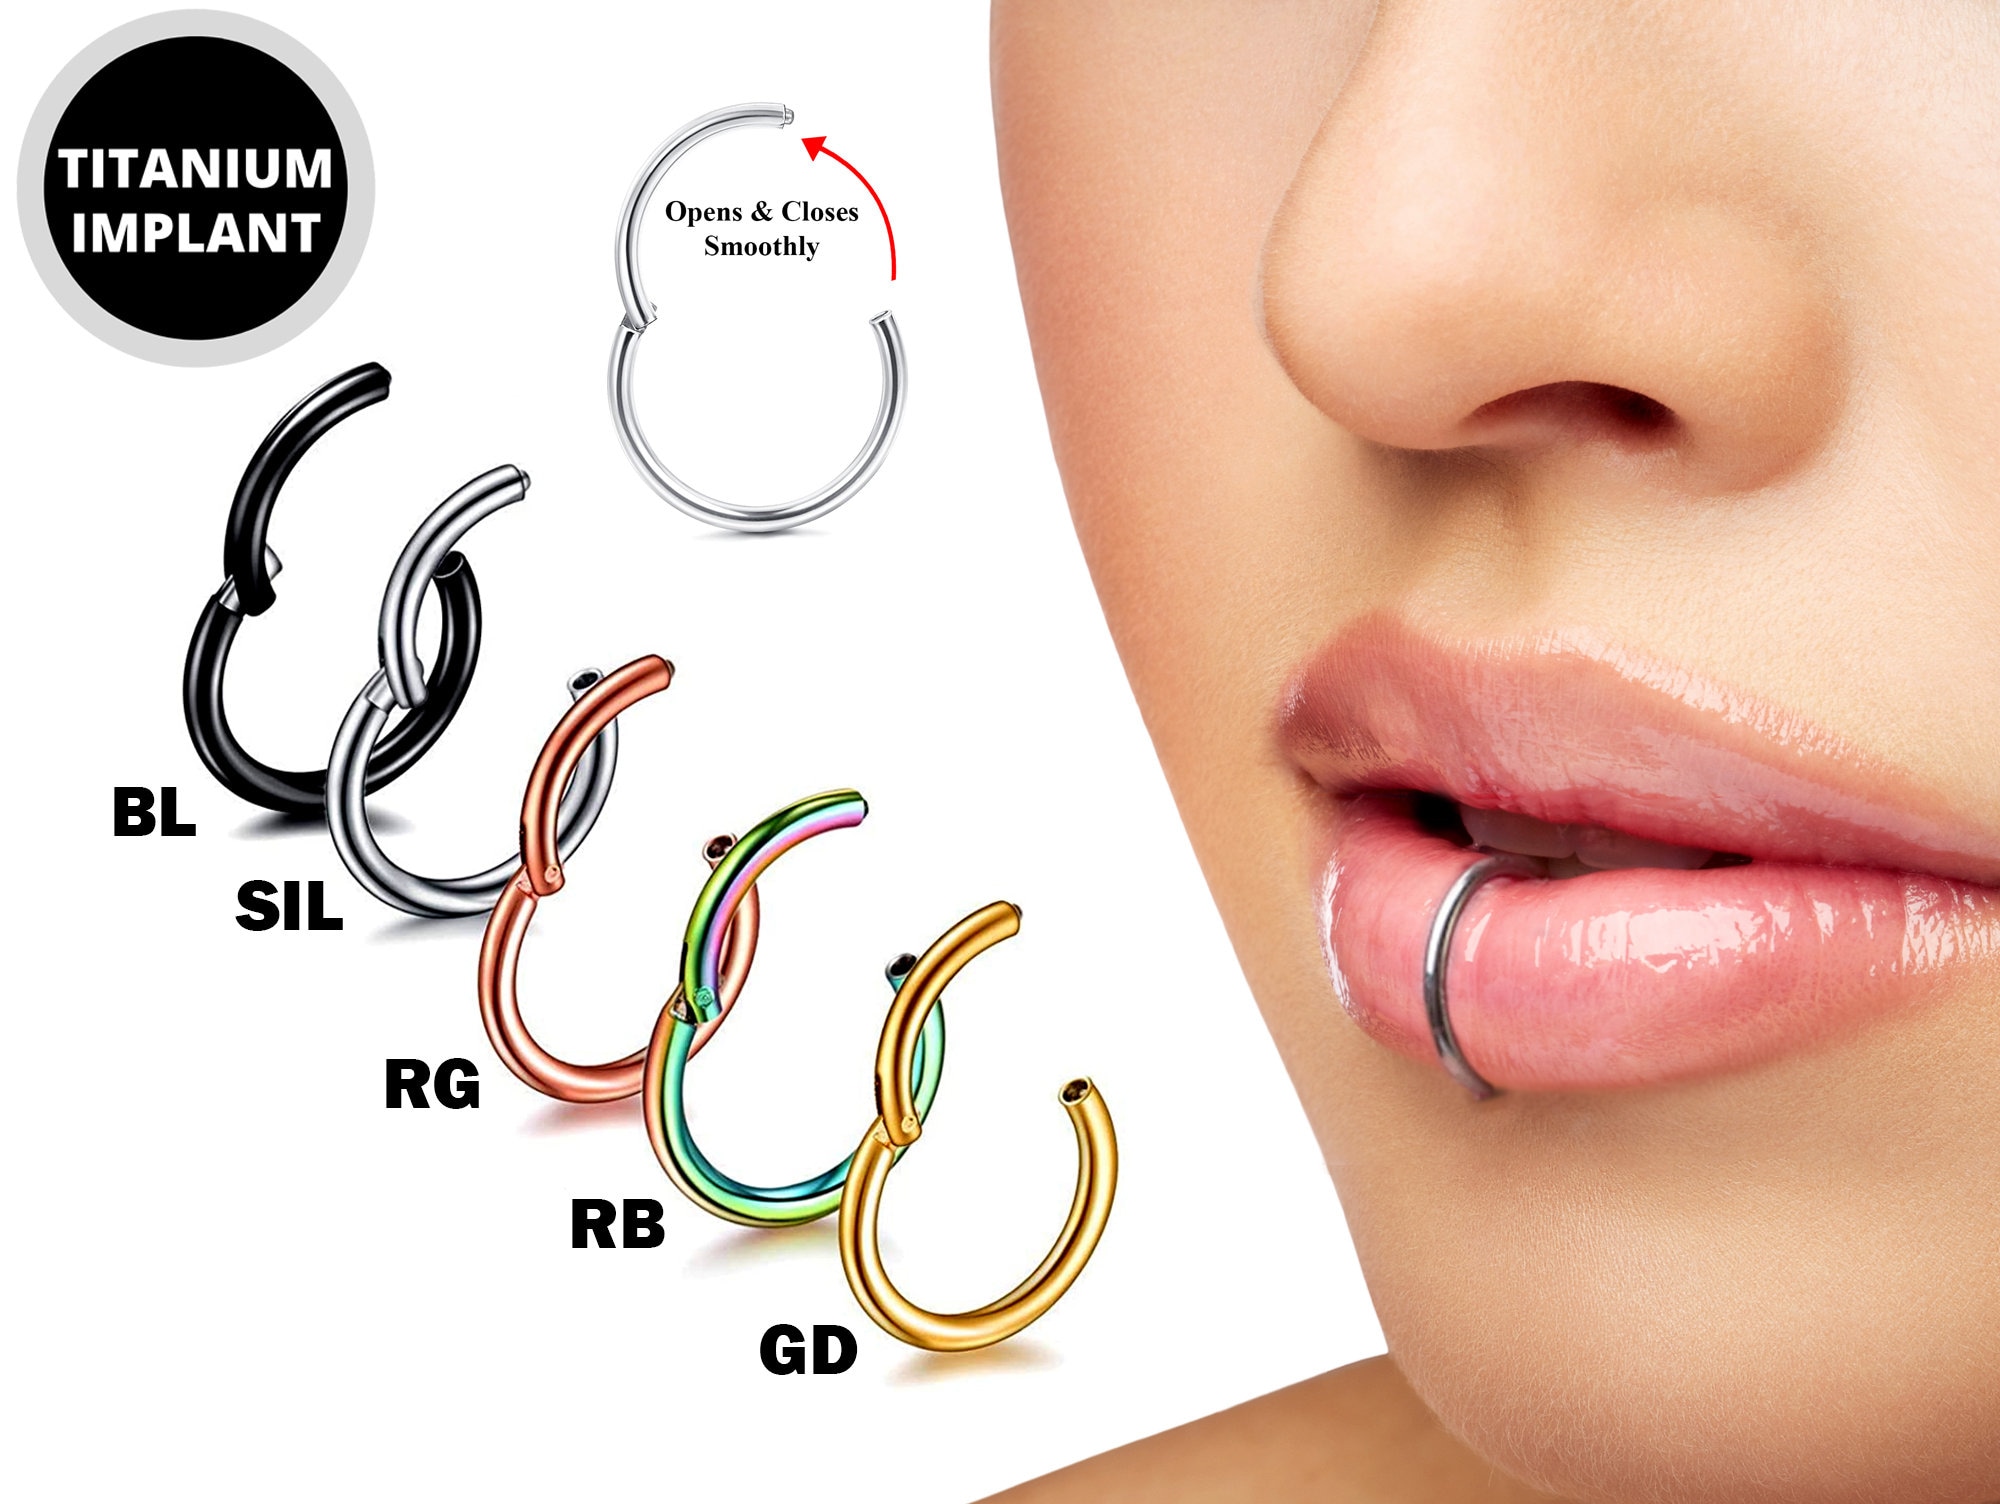  Beaupretty 1 Set Body Jewelry Tools septum rings lip